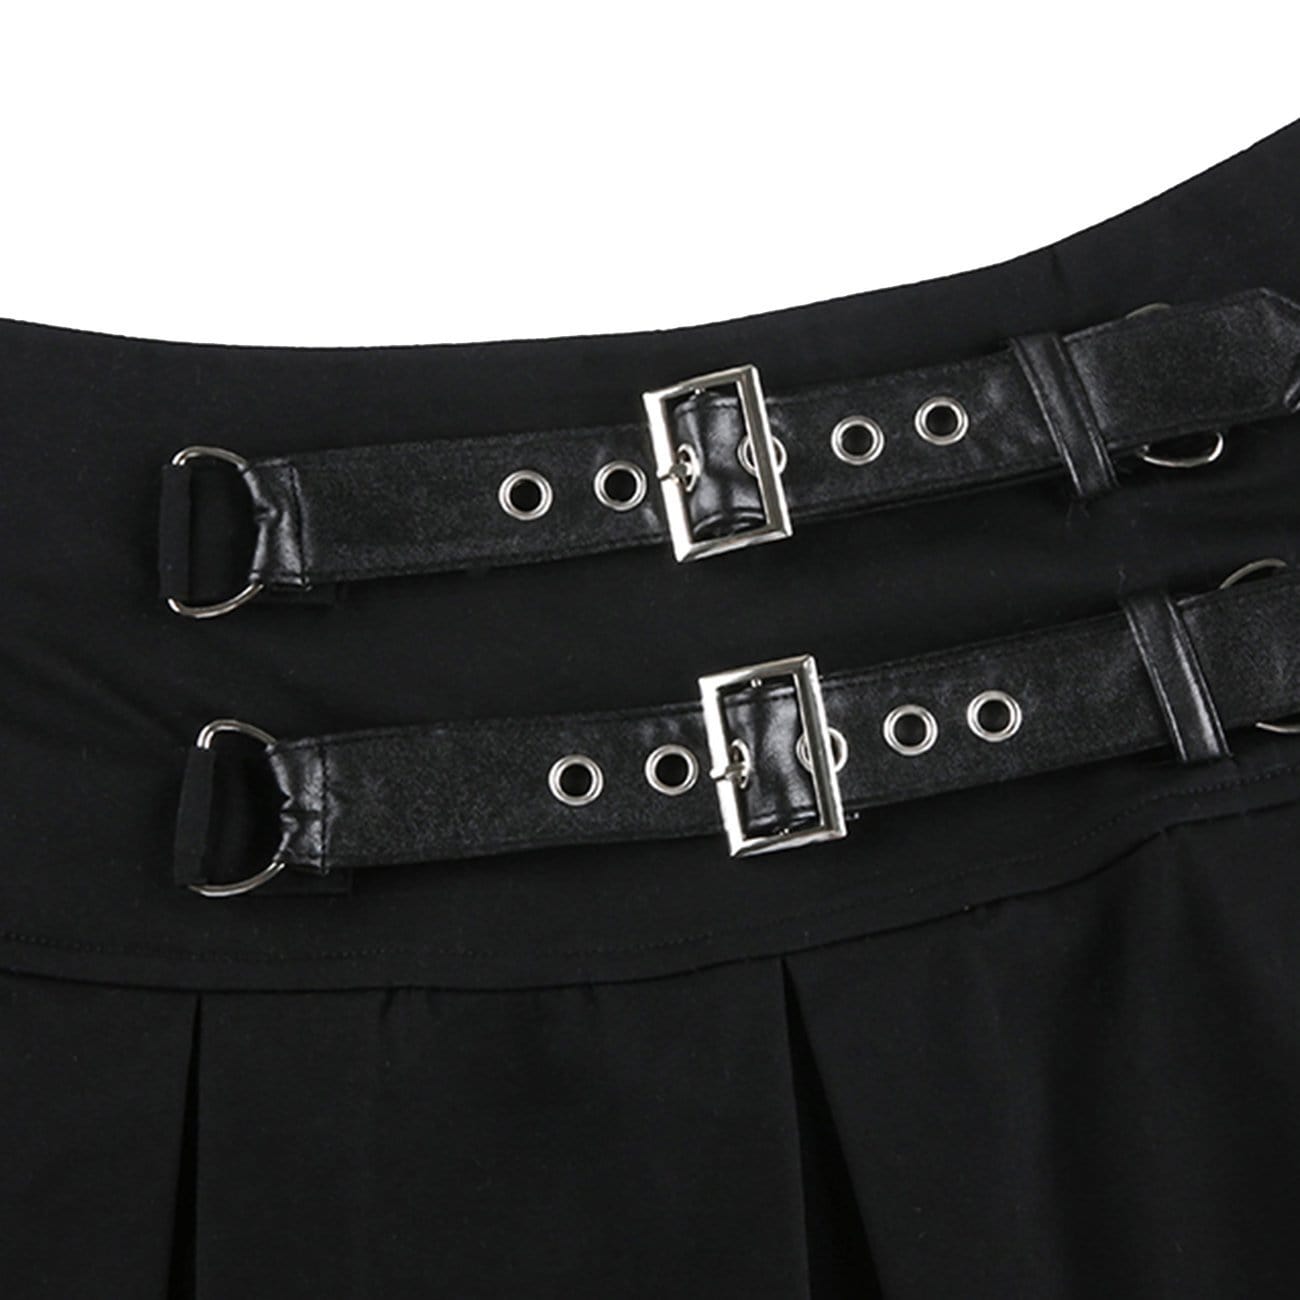 Dark Babes High-Waisted Leather Pleated Skirt